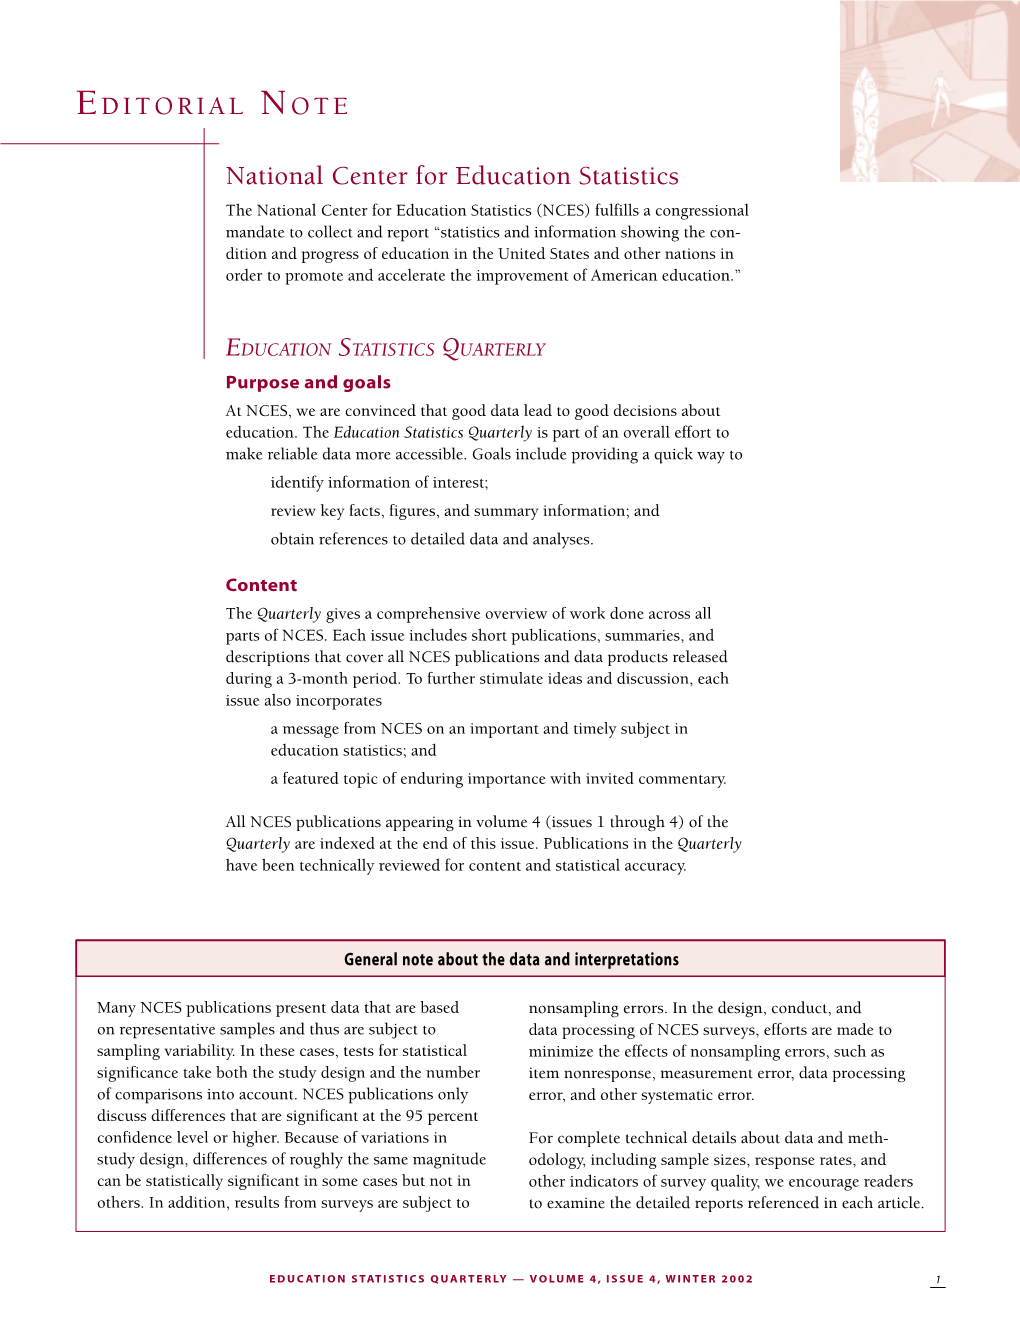 Education Statistics Quarterly, Volume 4, Issue 4, Winter 2002